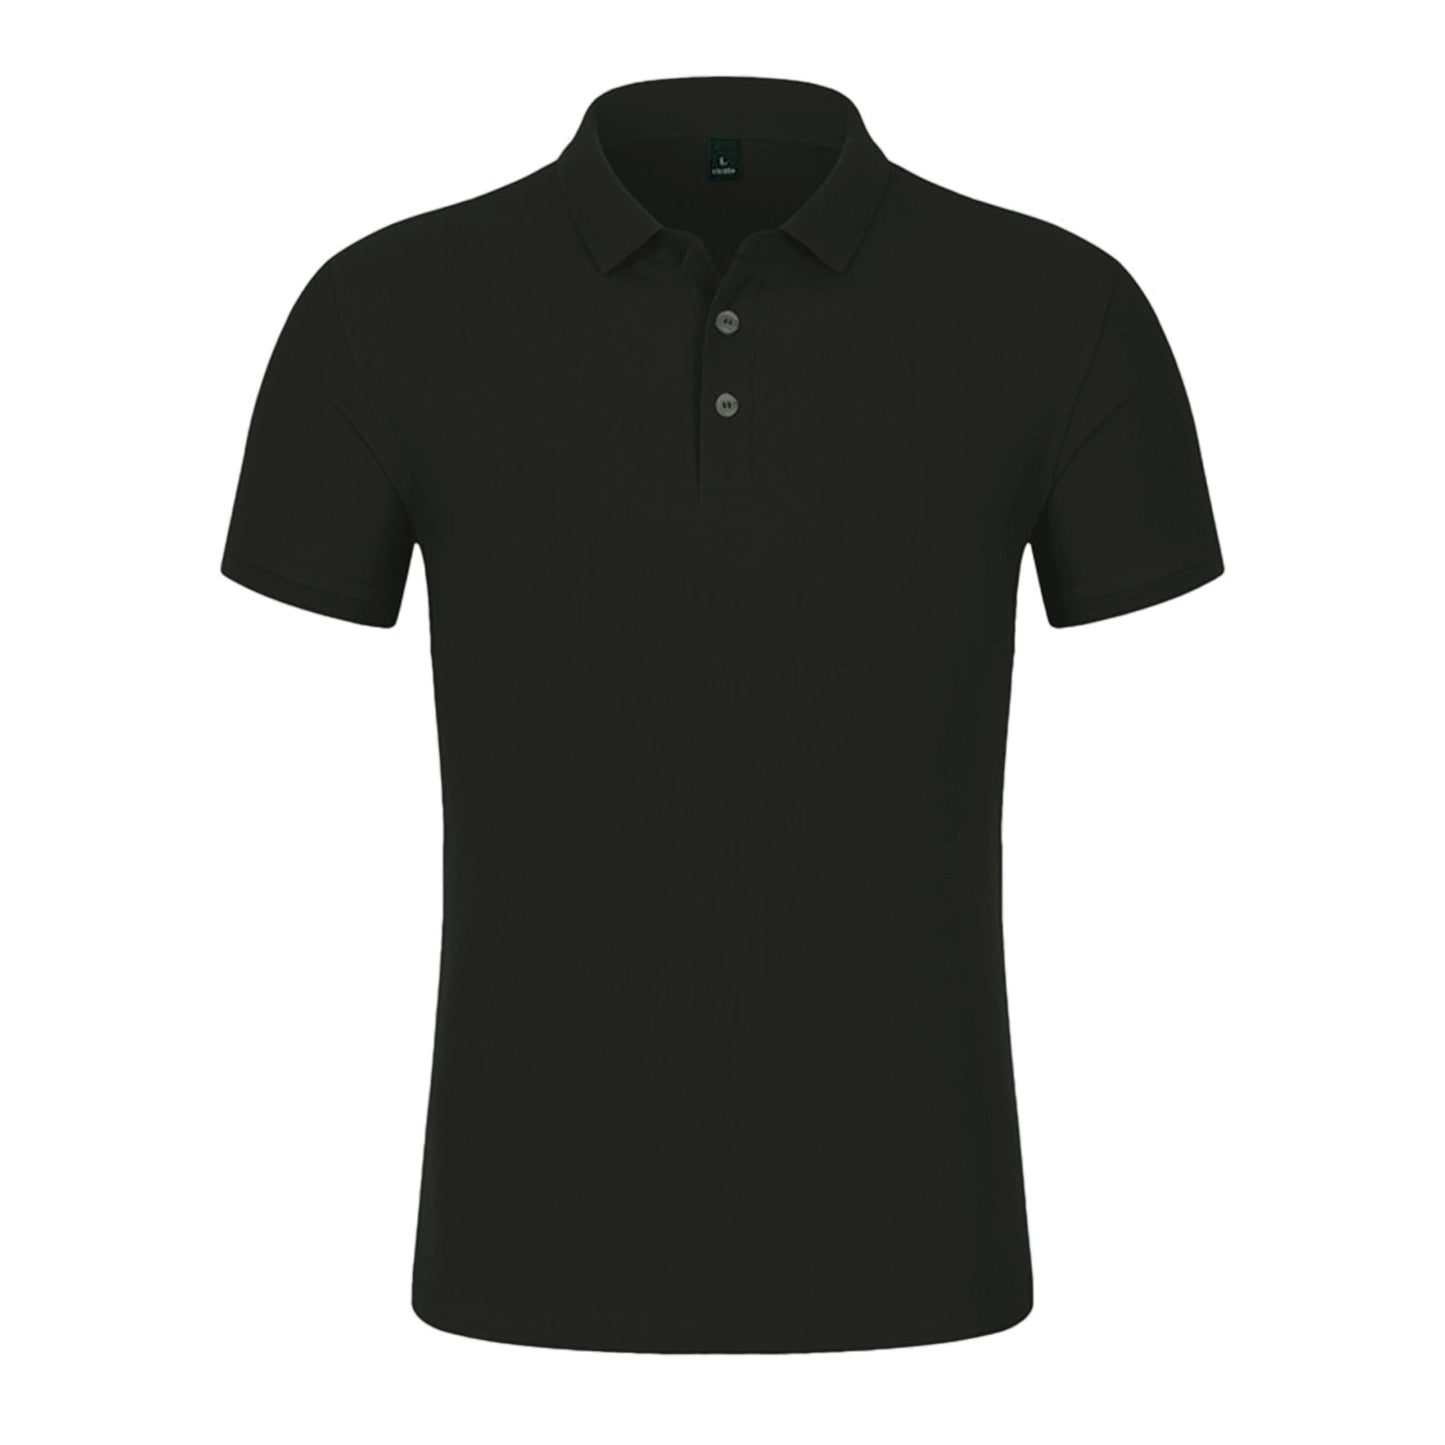 Men's Summer Polo Shirt Button Solid Color Turn Down Collar T-shirt Short Sleeve Black Office Daily Man Social Dress Tees Tops